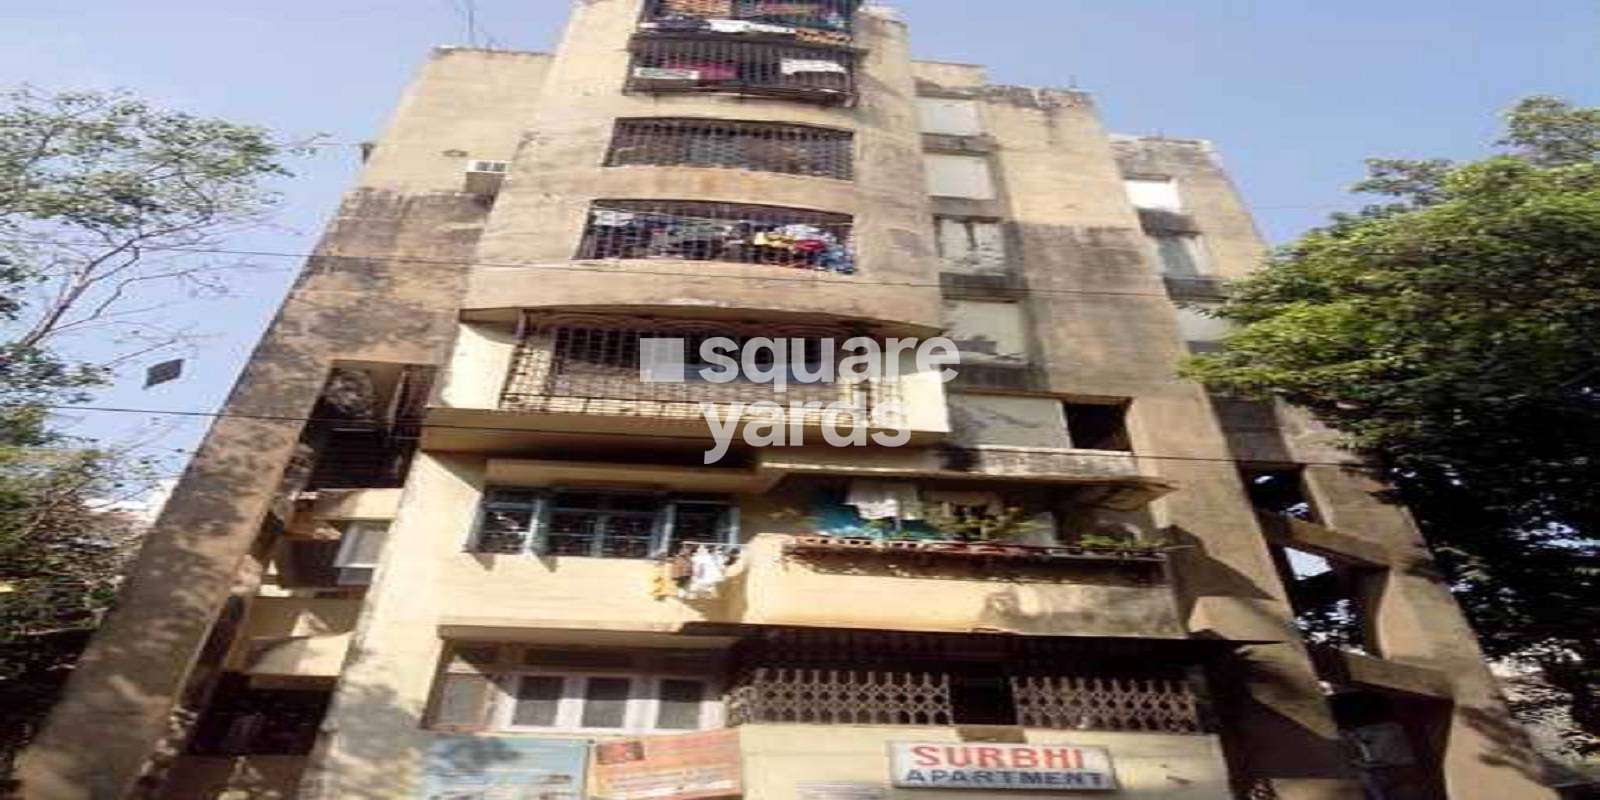 Surbhi Apartment Borivali Cover Image